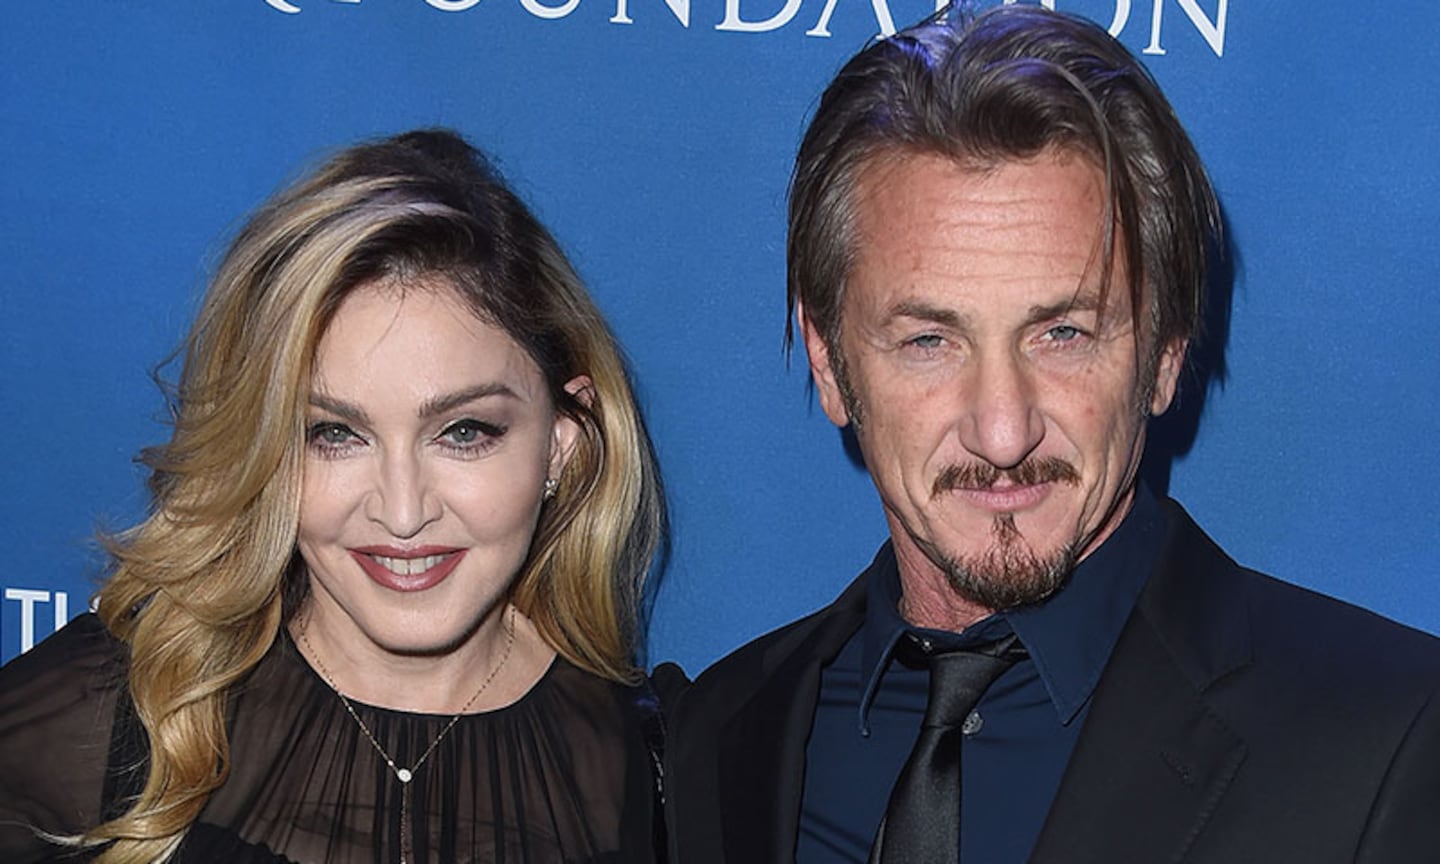 Madonna aseguró estar orgullosa de su ex esposo Sean Penn